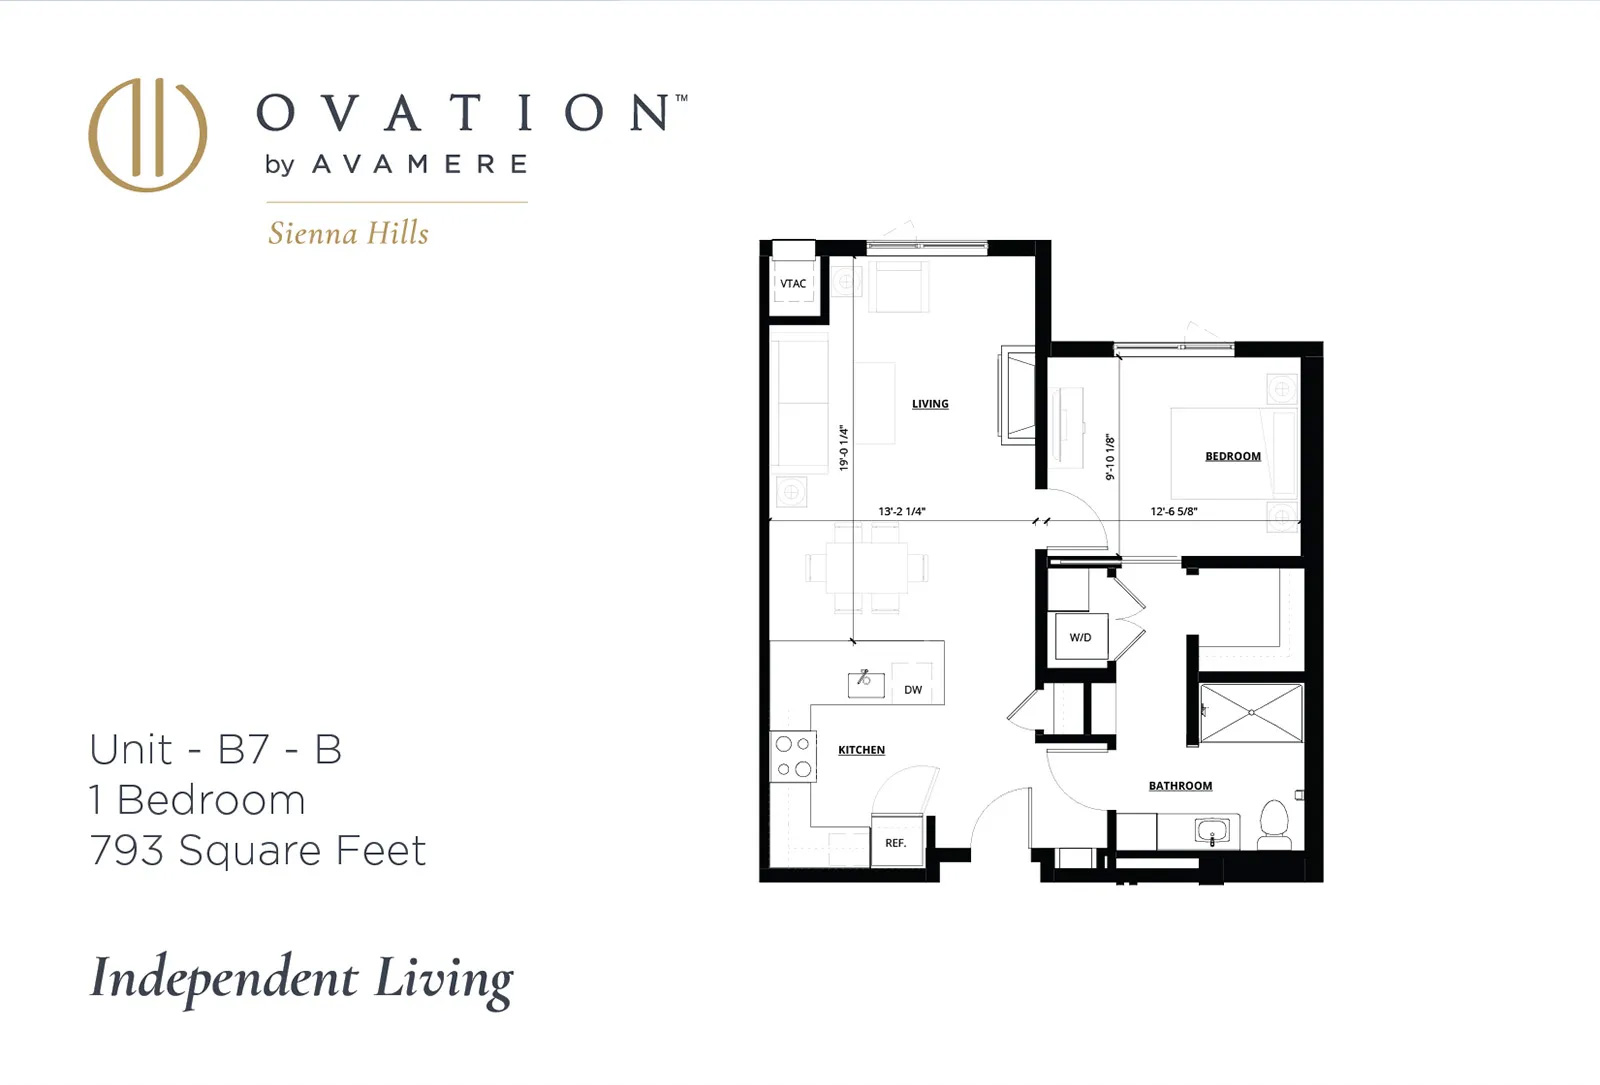 Ovation Sienna Hills Independent Living Floorplan 1 Bedroom 793 sq ft